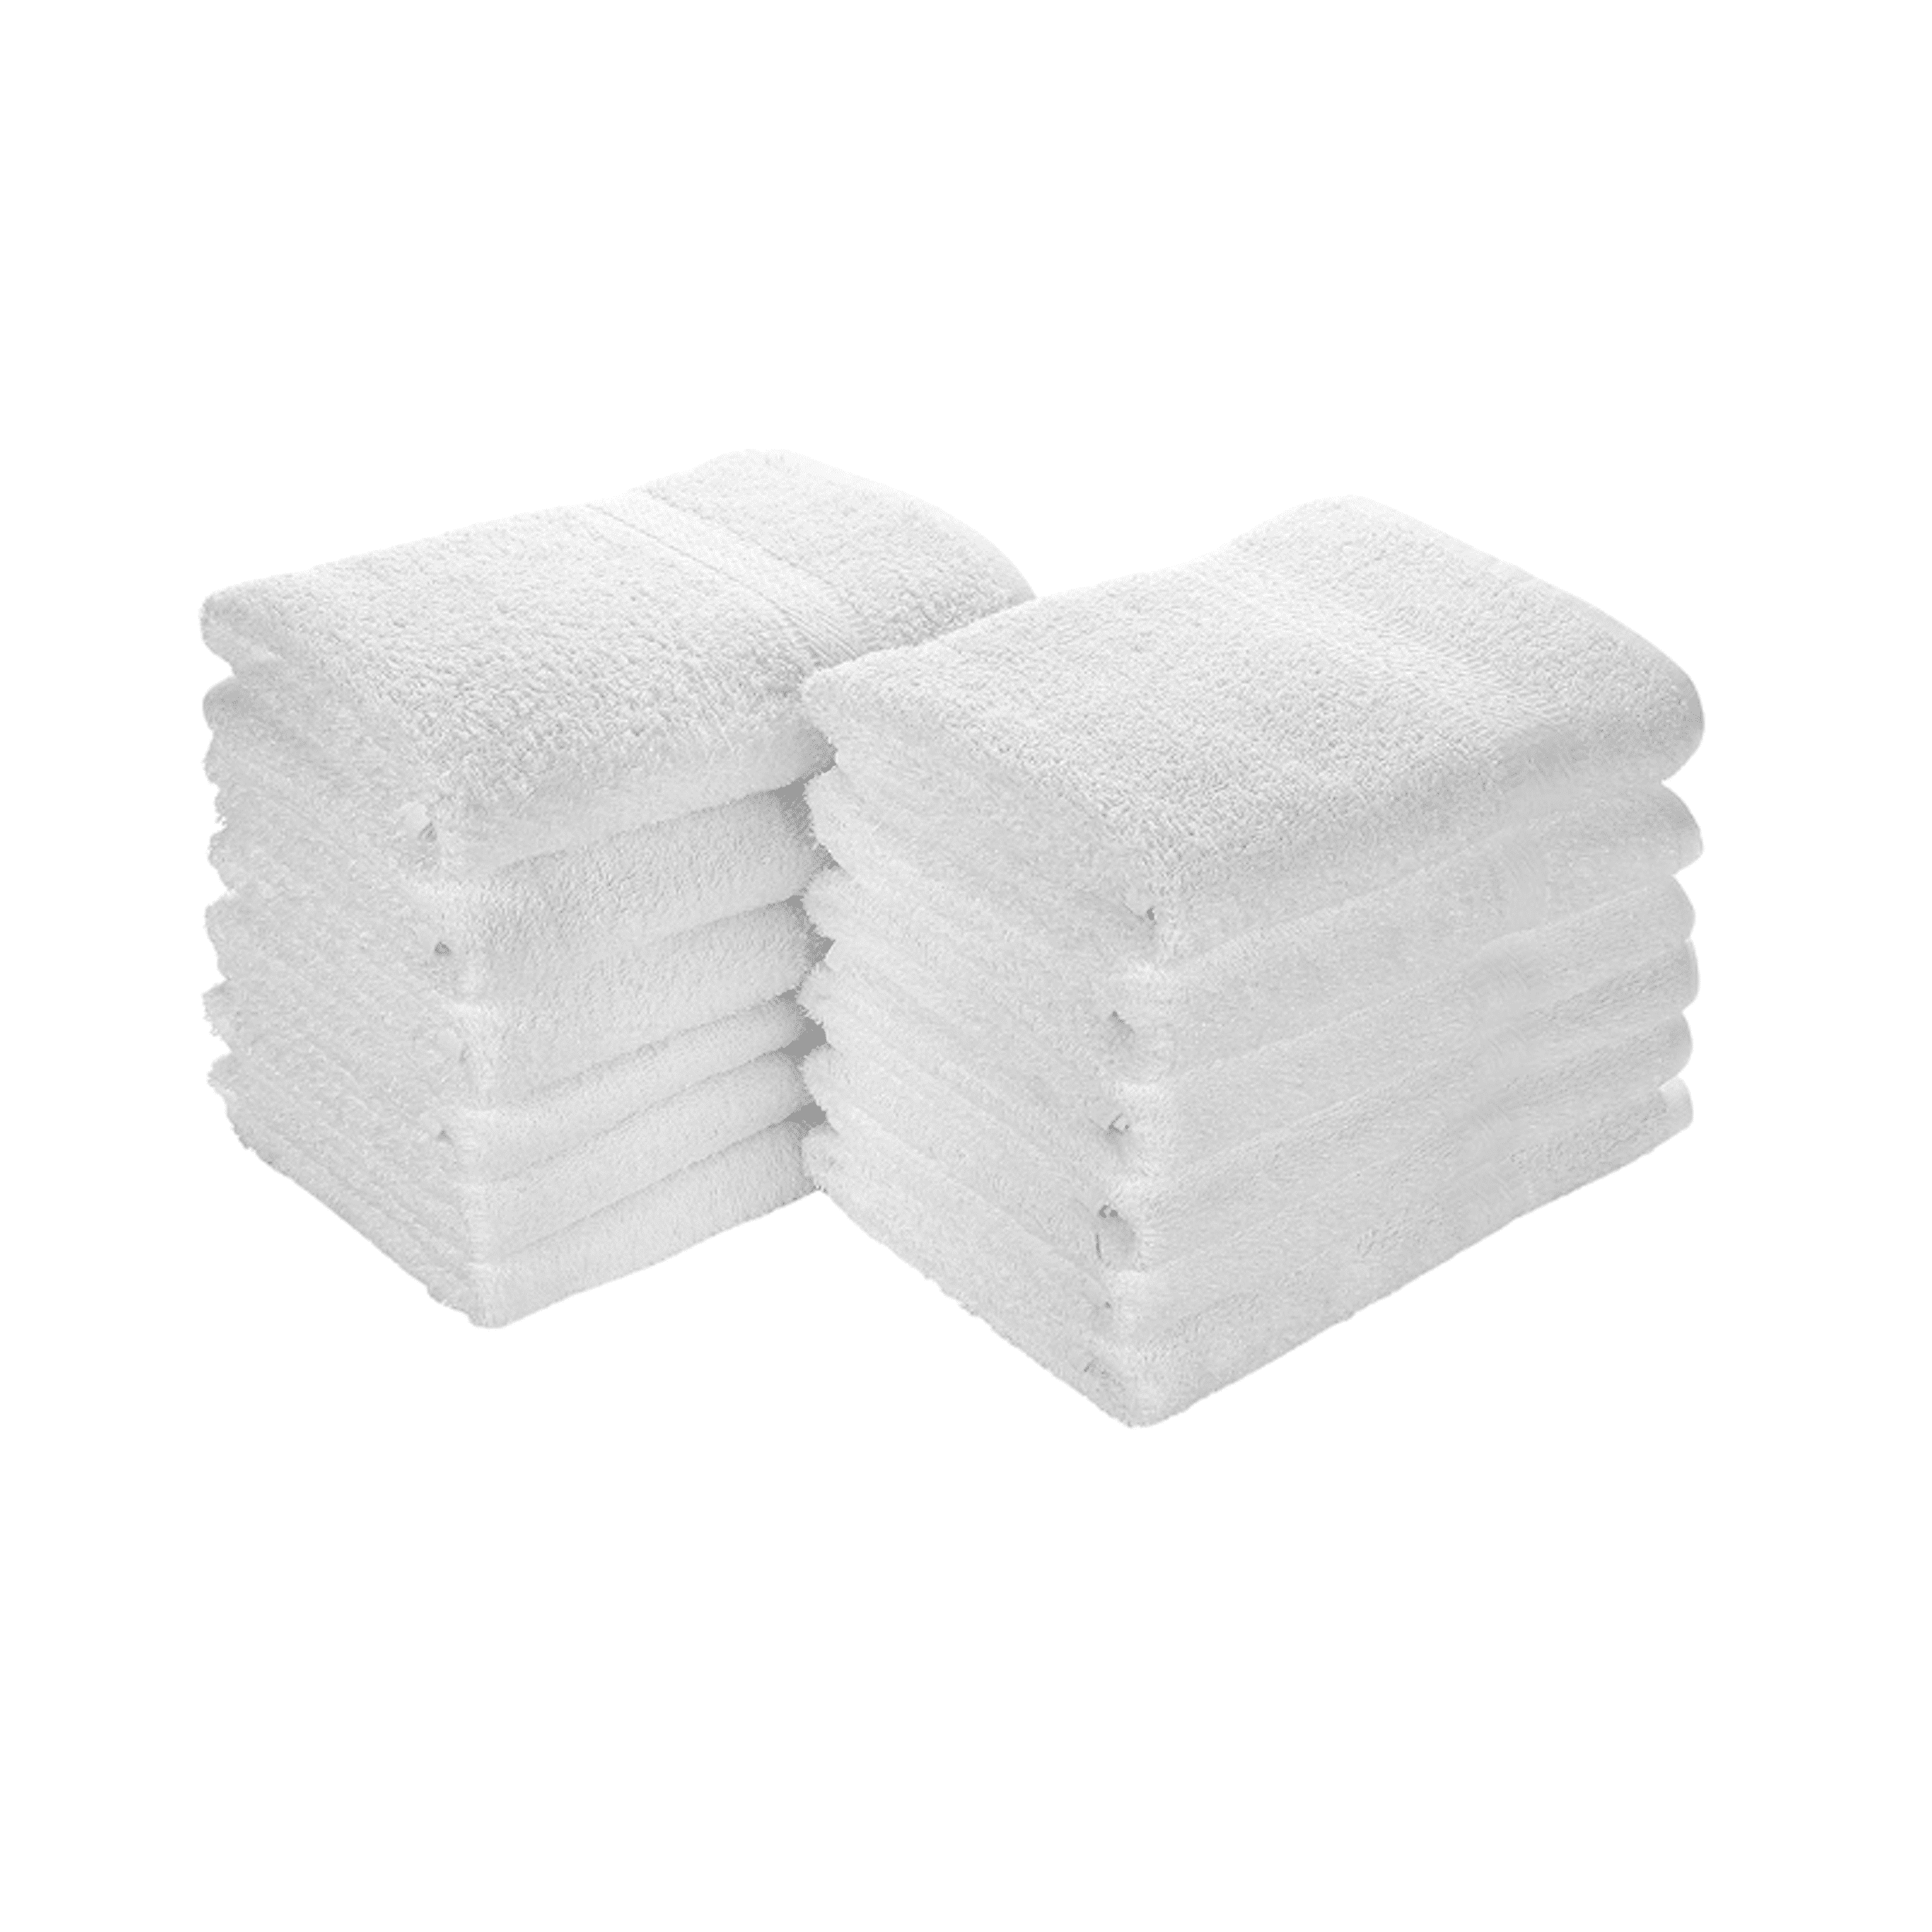 6  new white 100% cotton hotel bath towels double cam 20x40 ga towels 